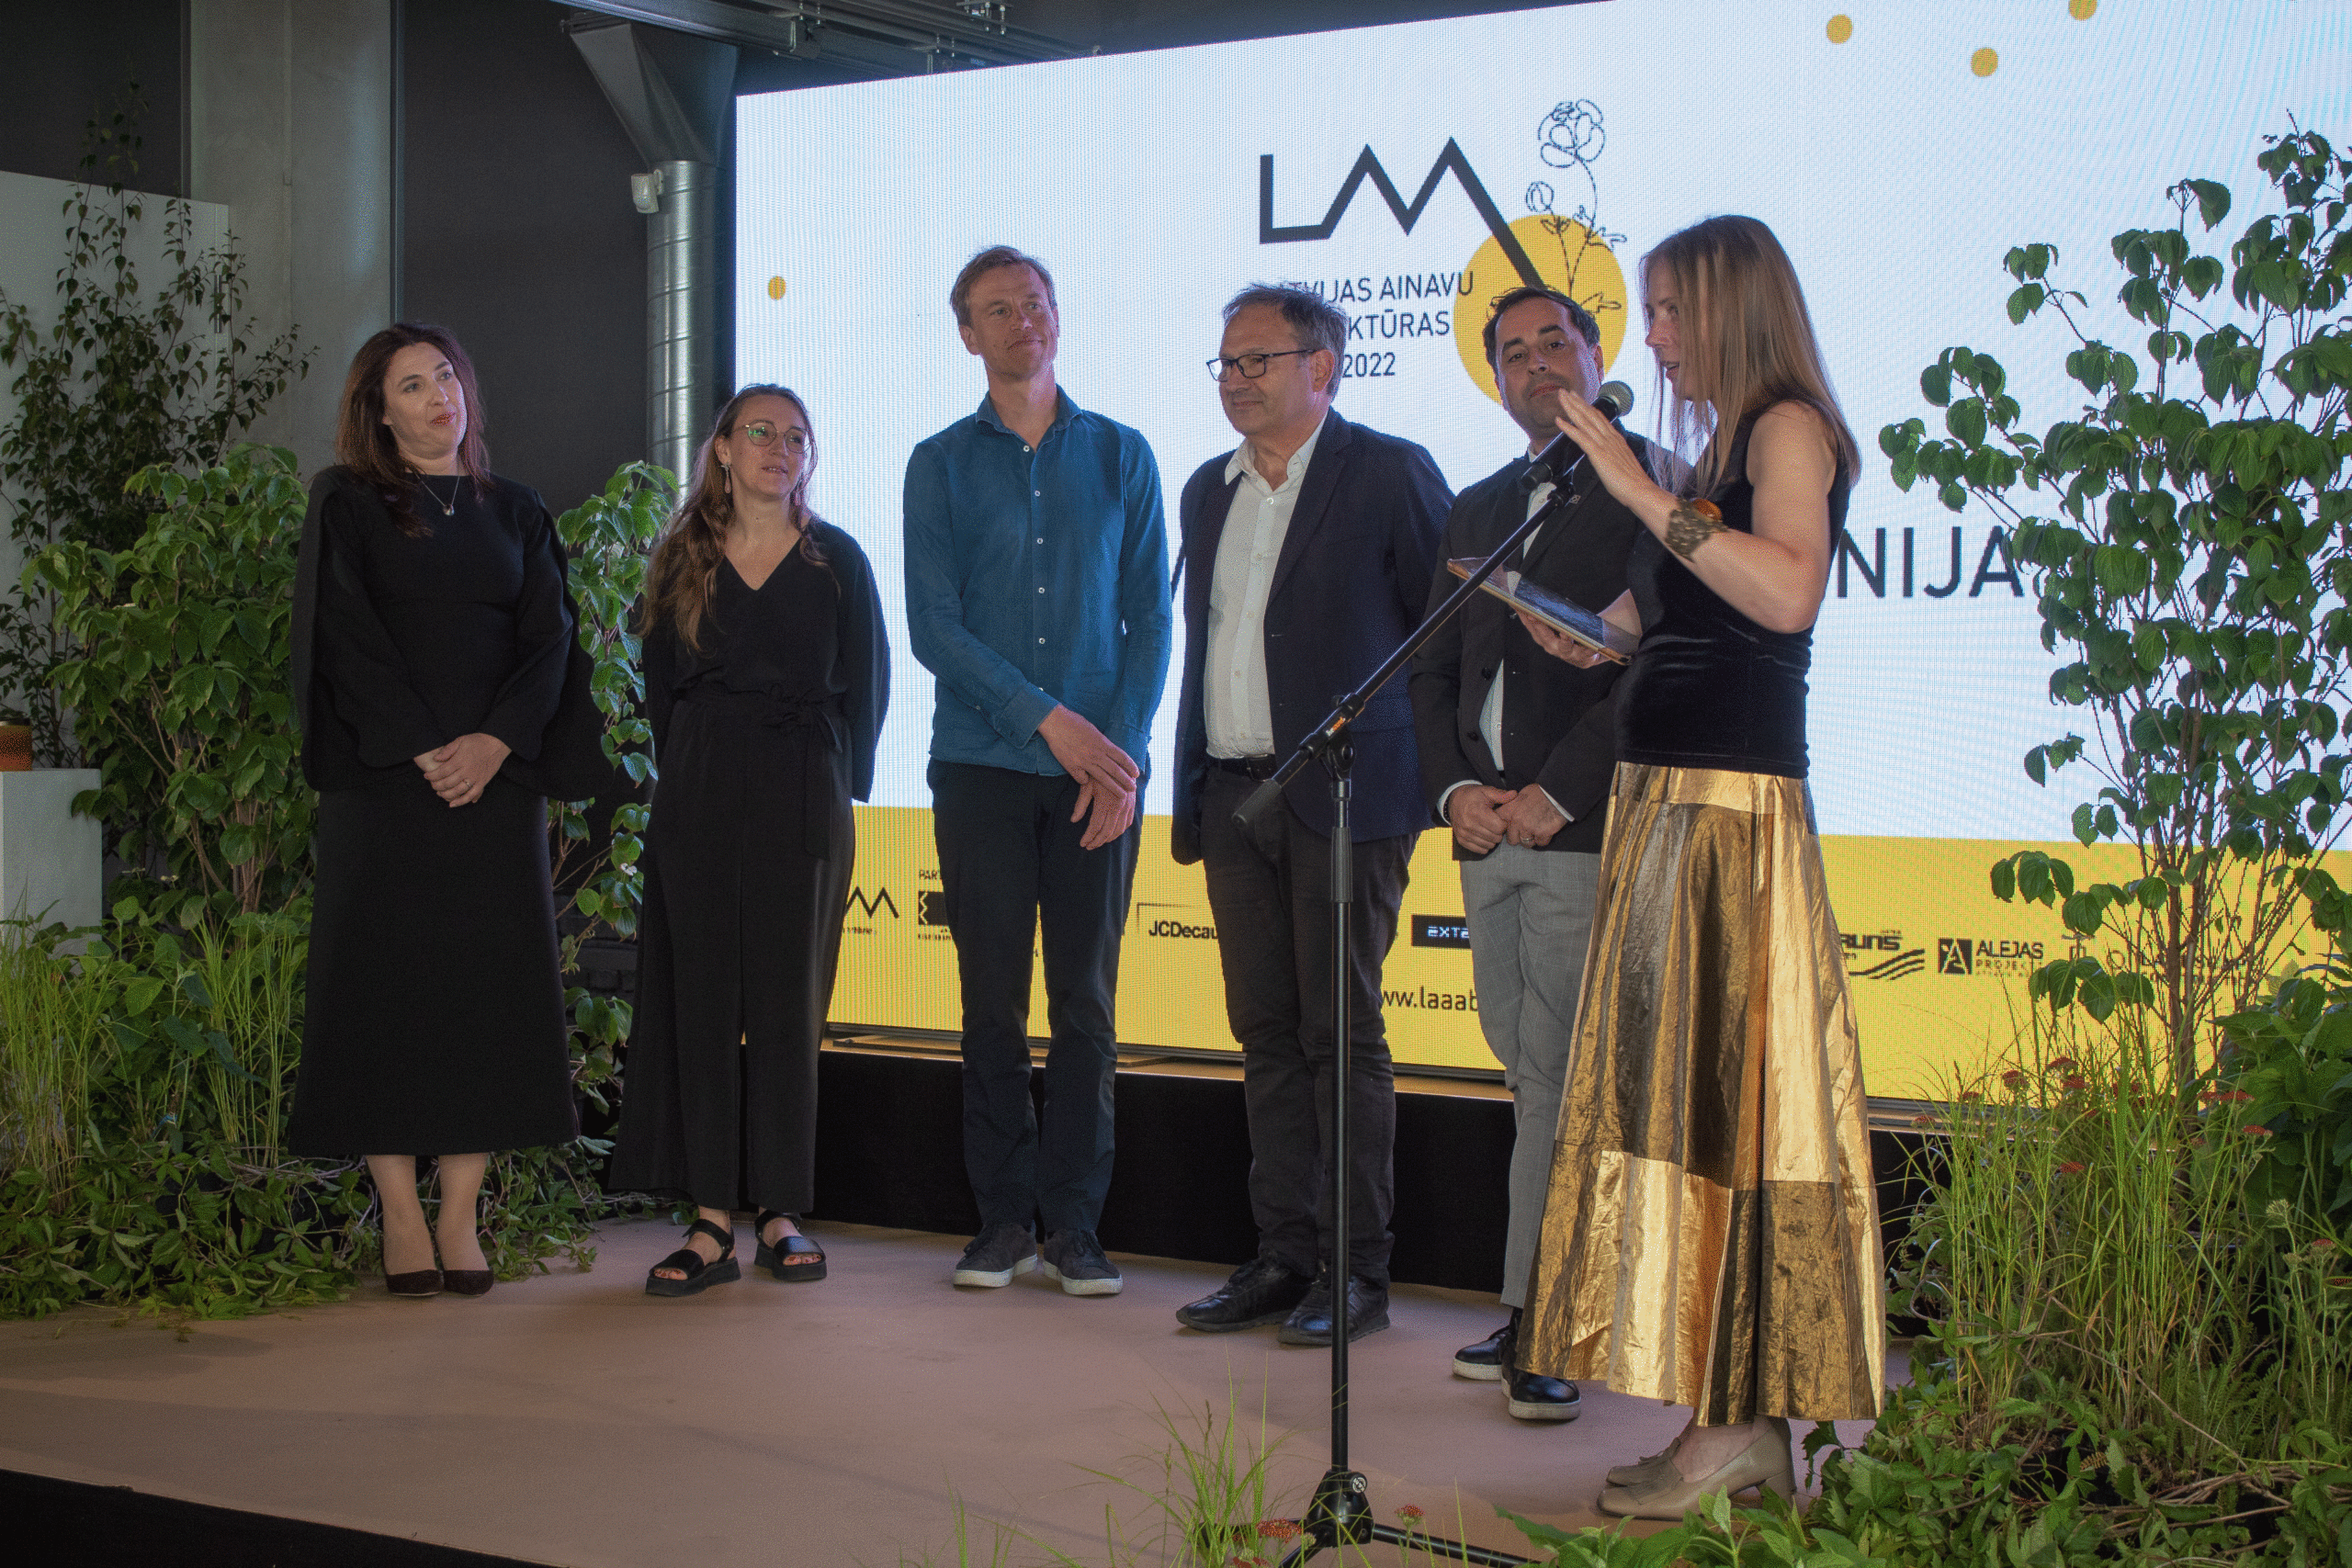 Laureates of the Latvian Landscape Architecture Award 2022